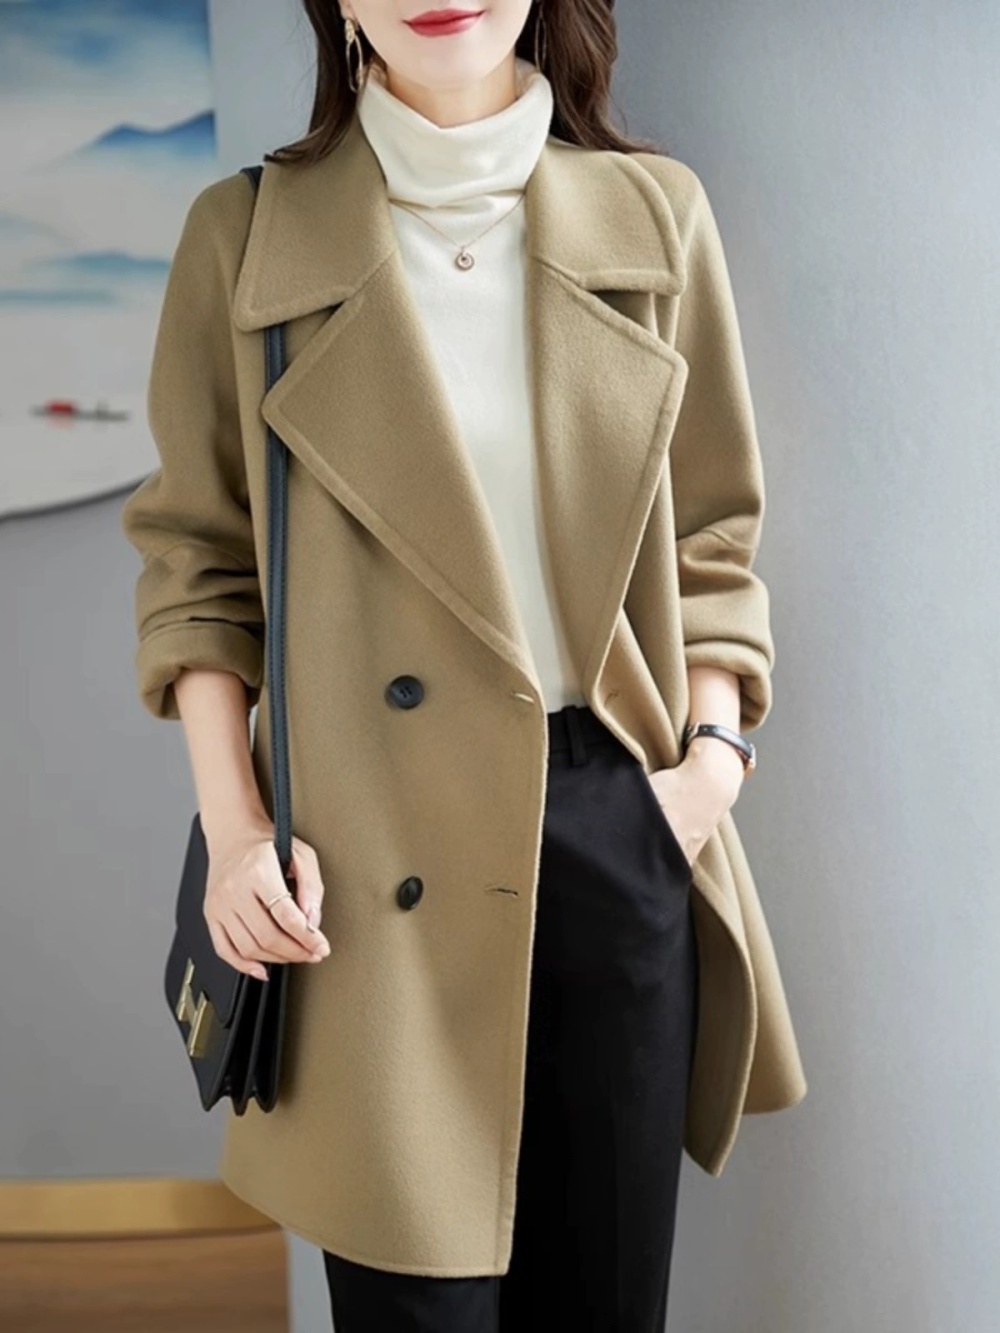 Western style autumn and winter woolen coat